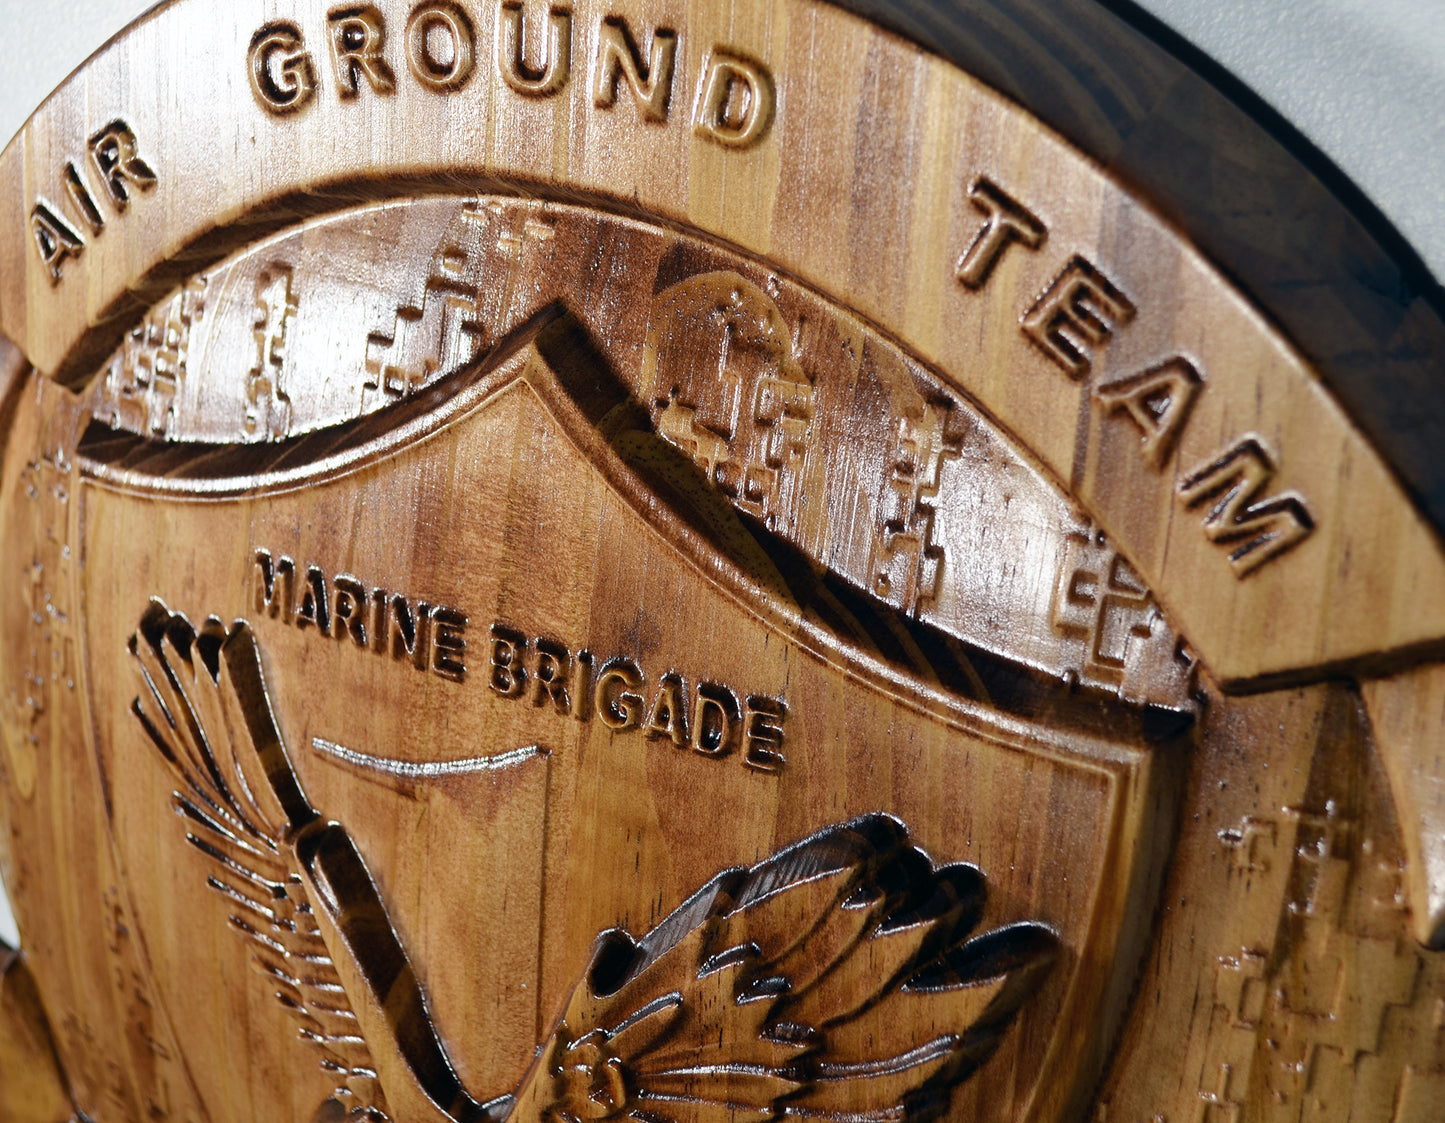 USMC 1st Marine Expeditionary Brigade (1st MEB), CNC 3d wood carving, military plaque